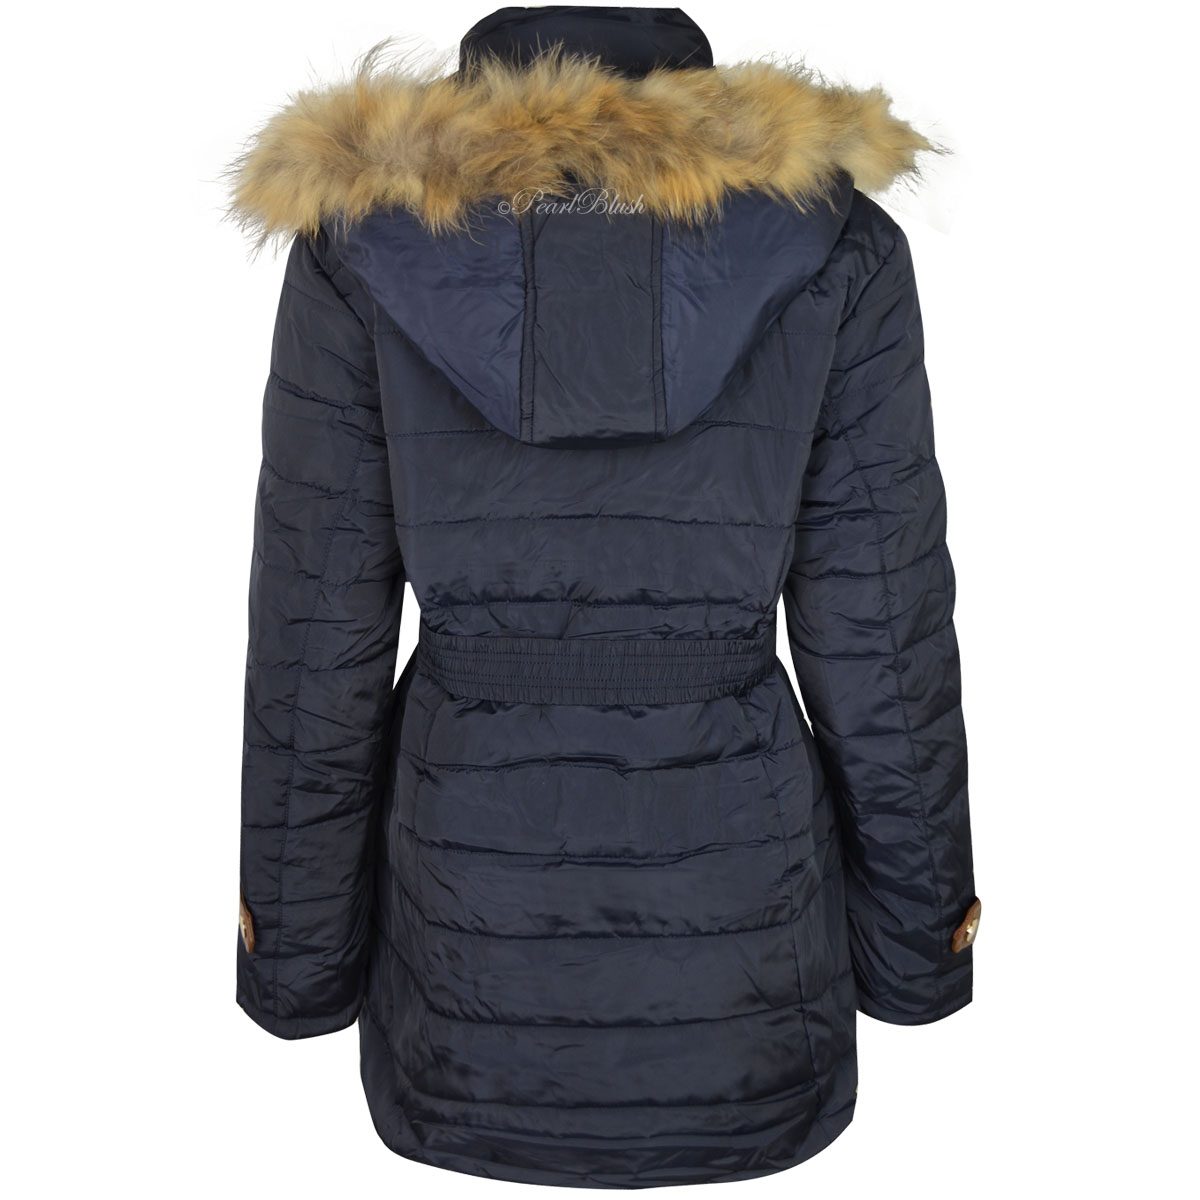 women's plus size coat with fur hood